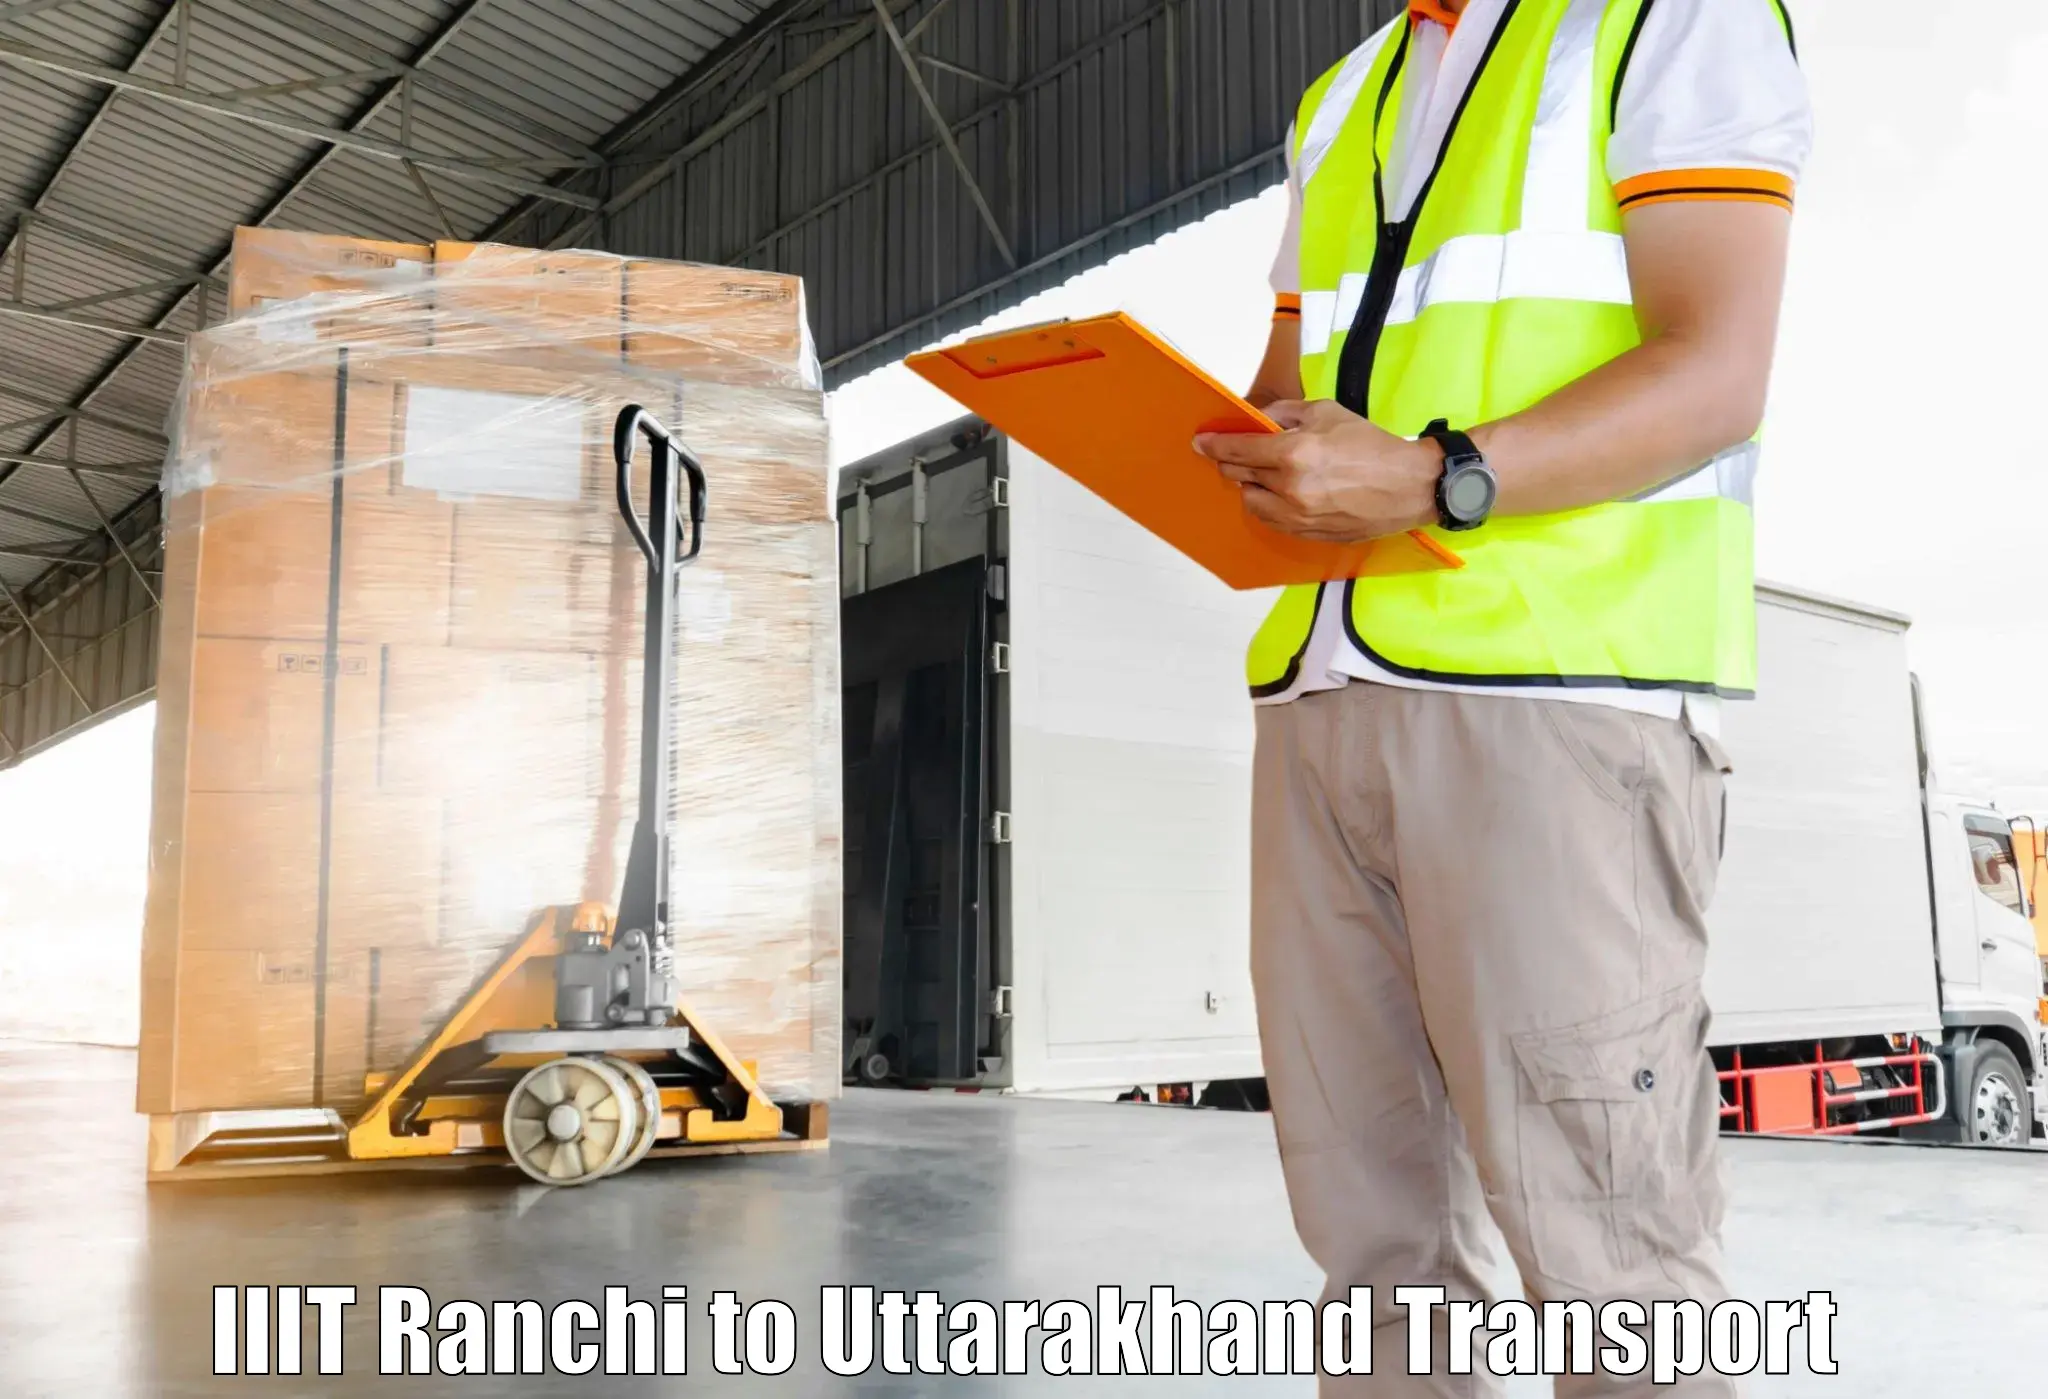 Cargo train transport services IIIT Ranchi to Lansdowne